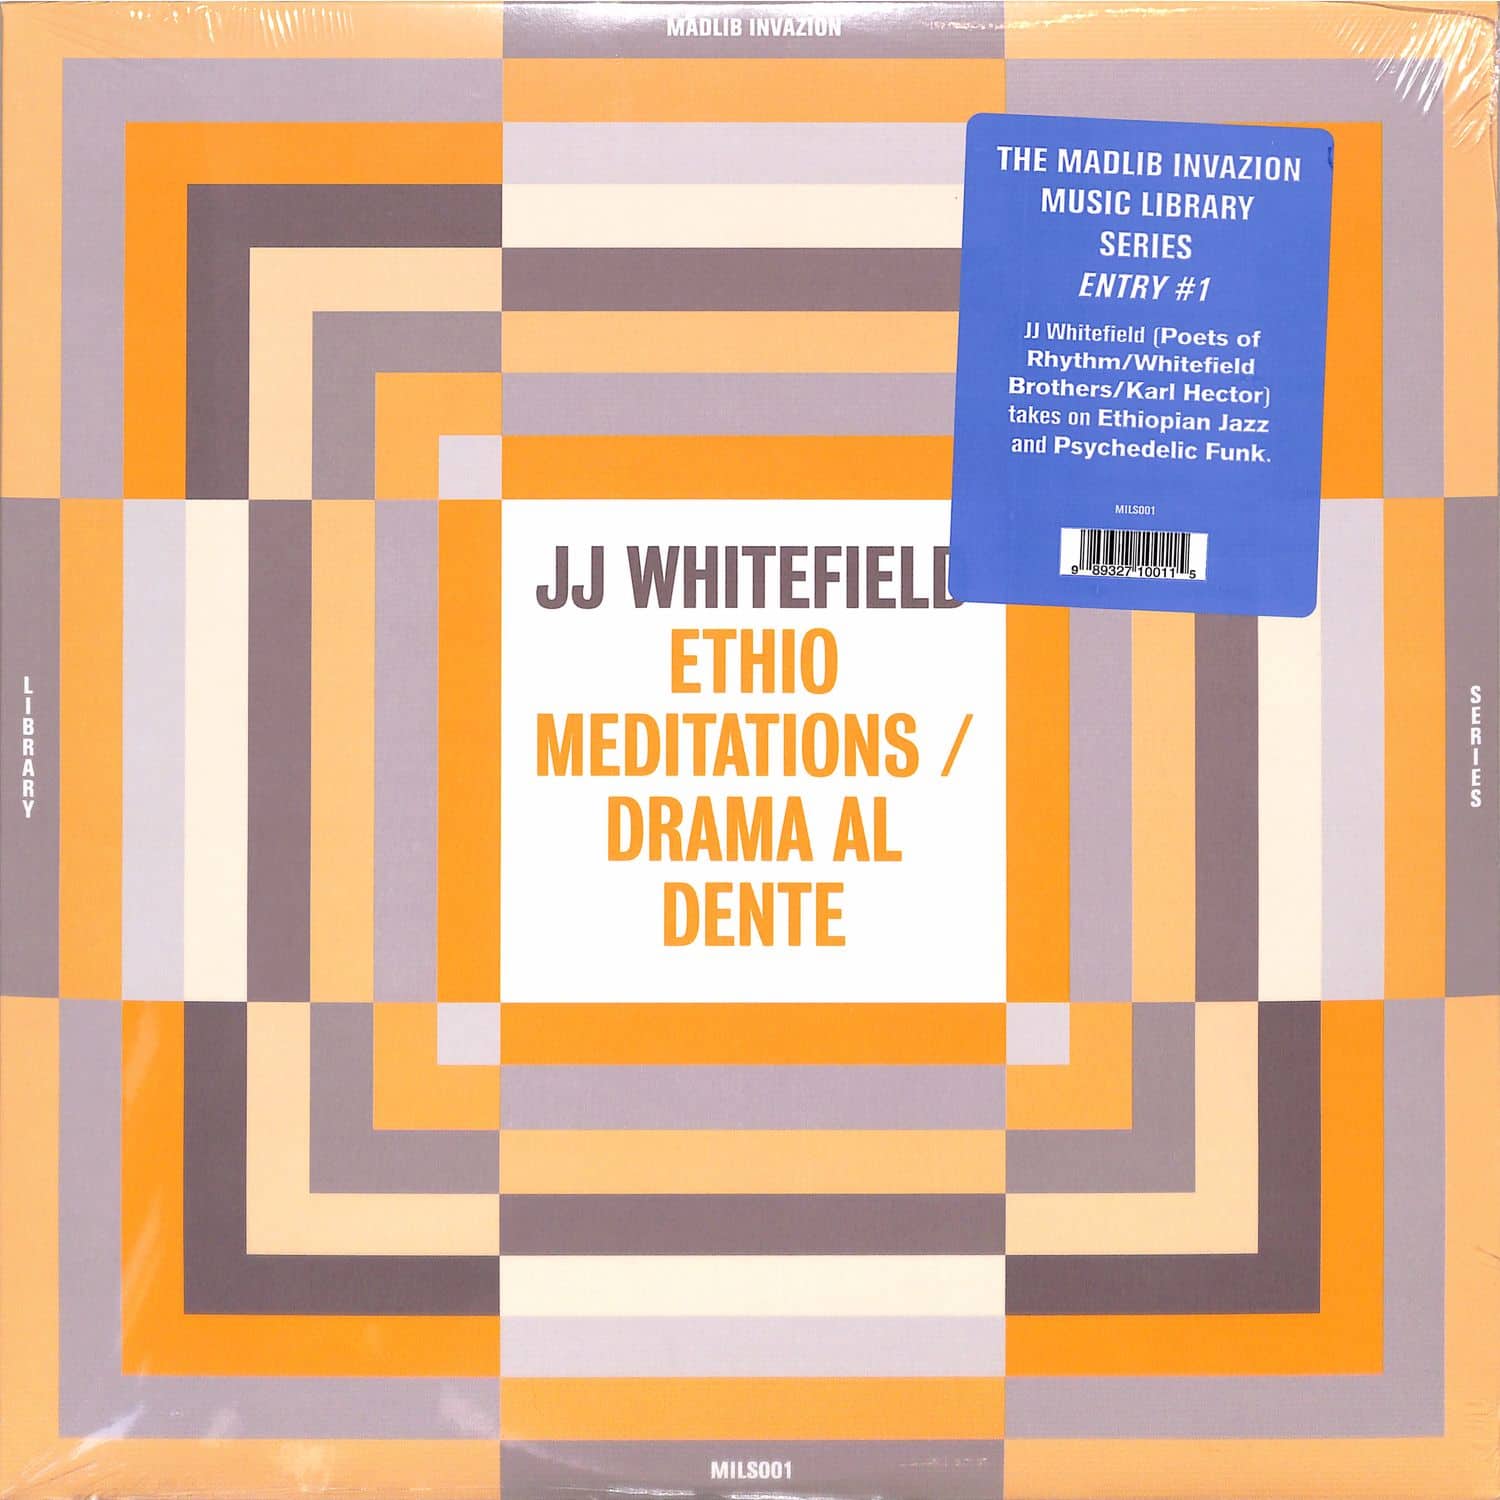 JJ Whitefield - ETHIO MEDITATIONS / DRAMA AL DENTE 